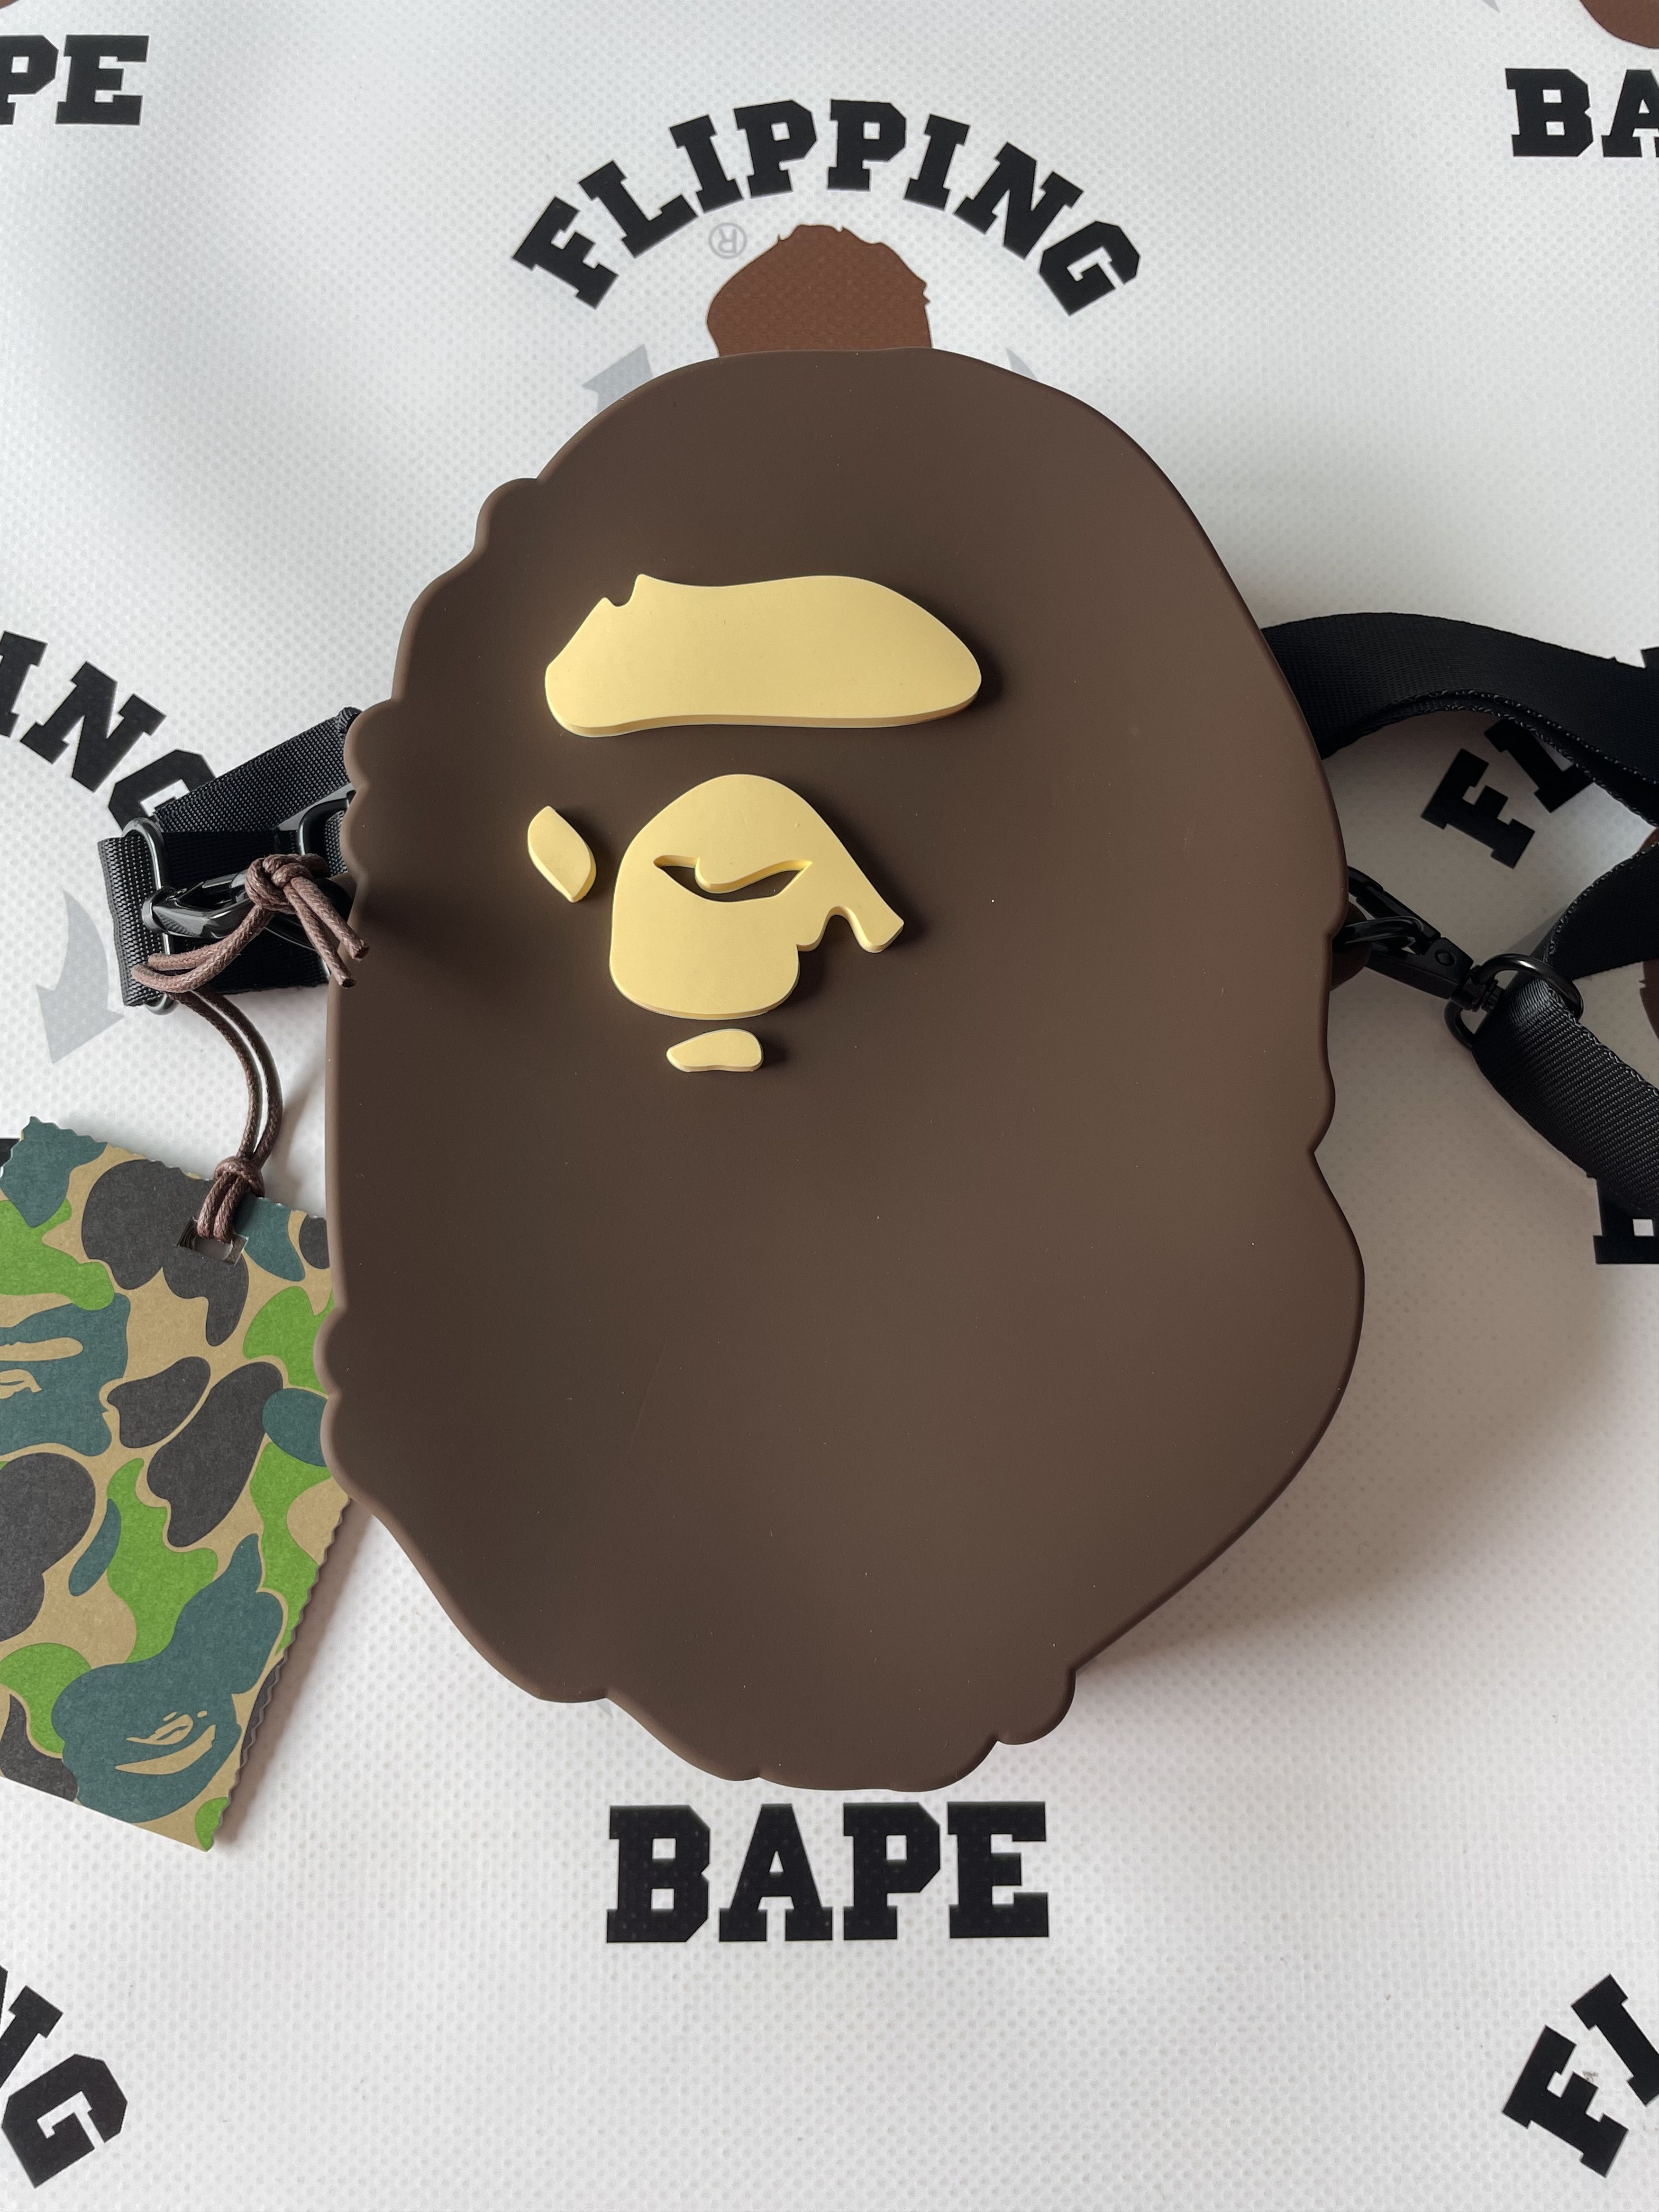 Bape BAPE APE HEAD SILICON SHOULDER BAG | Grailed